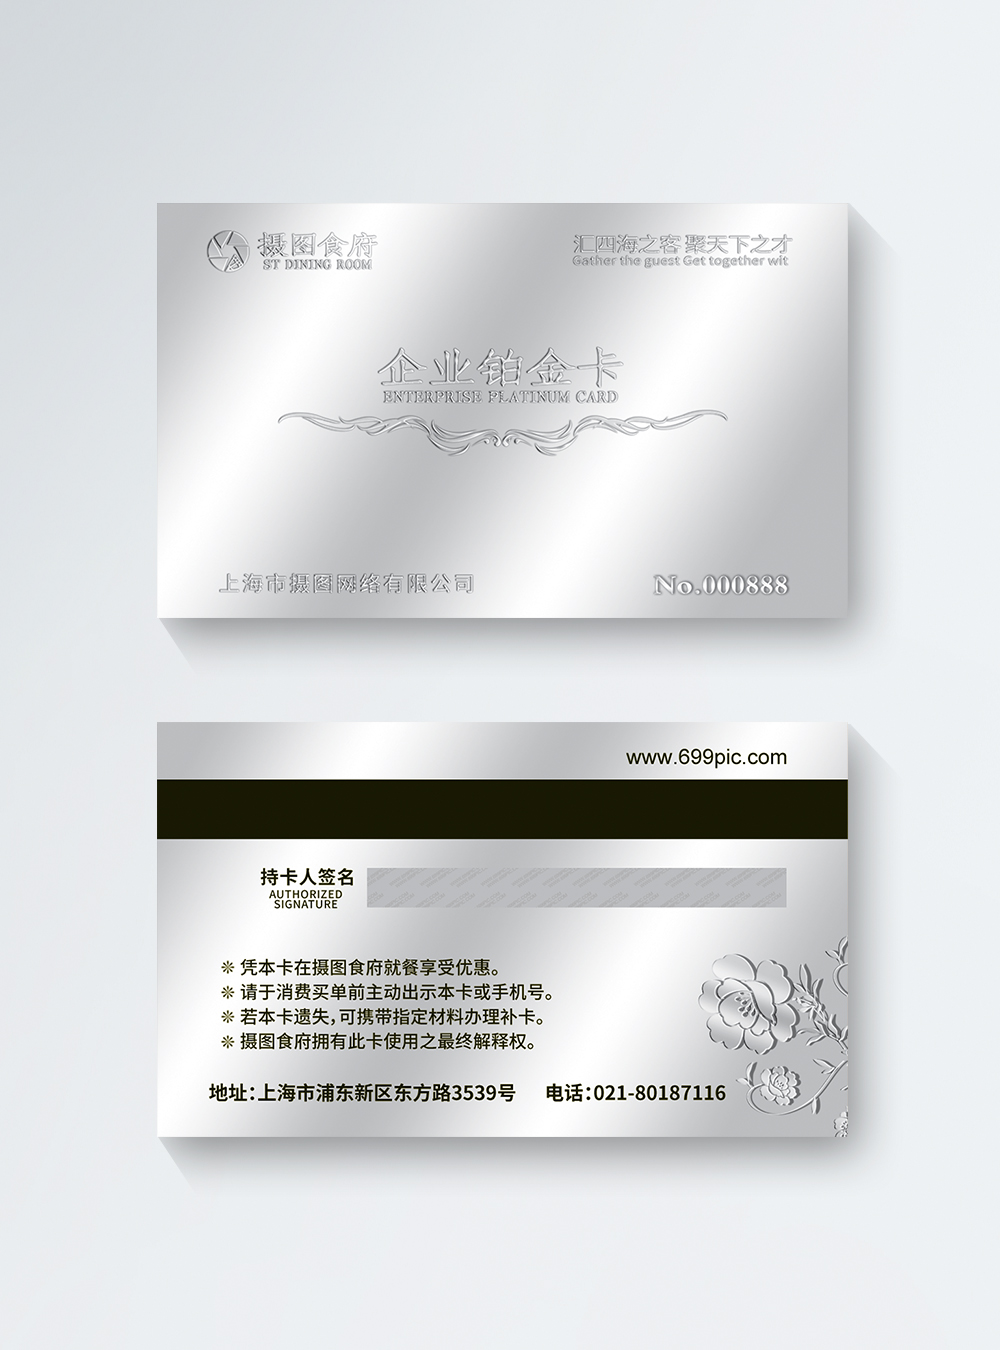 vip-enterprise-platinum-card-membership-card-template-template-image